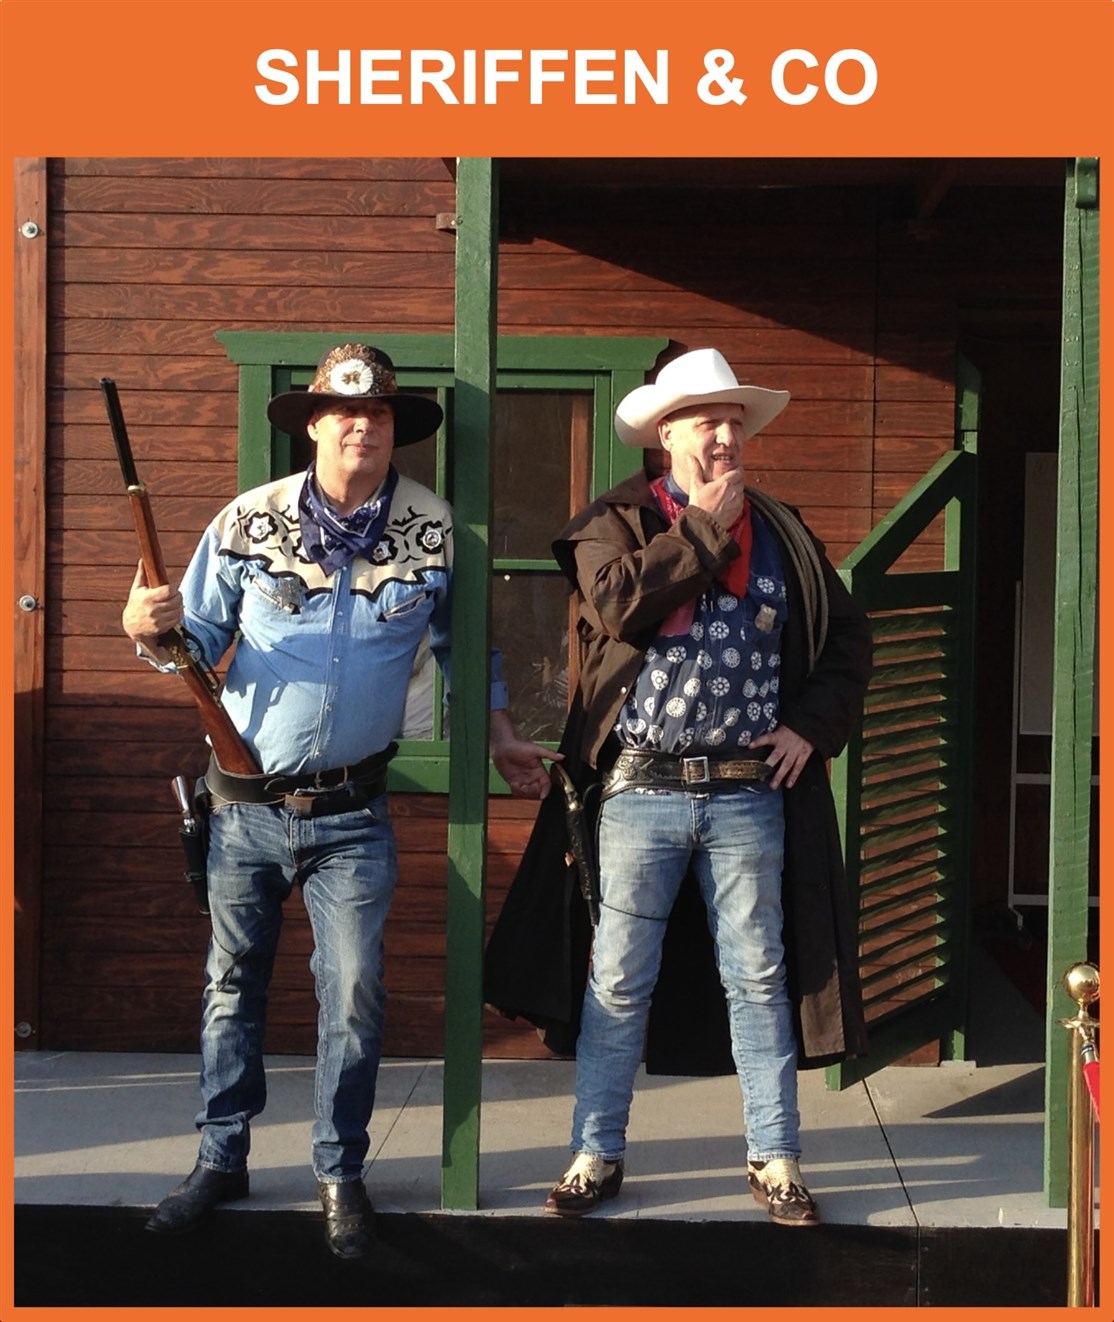 Sheriffen & Co.
Book vaskeægte Cowboys til western event & arr.
Gunfight, Røverier & walk a´ round i dine gader m.m.
*